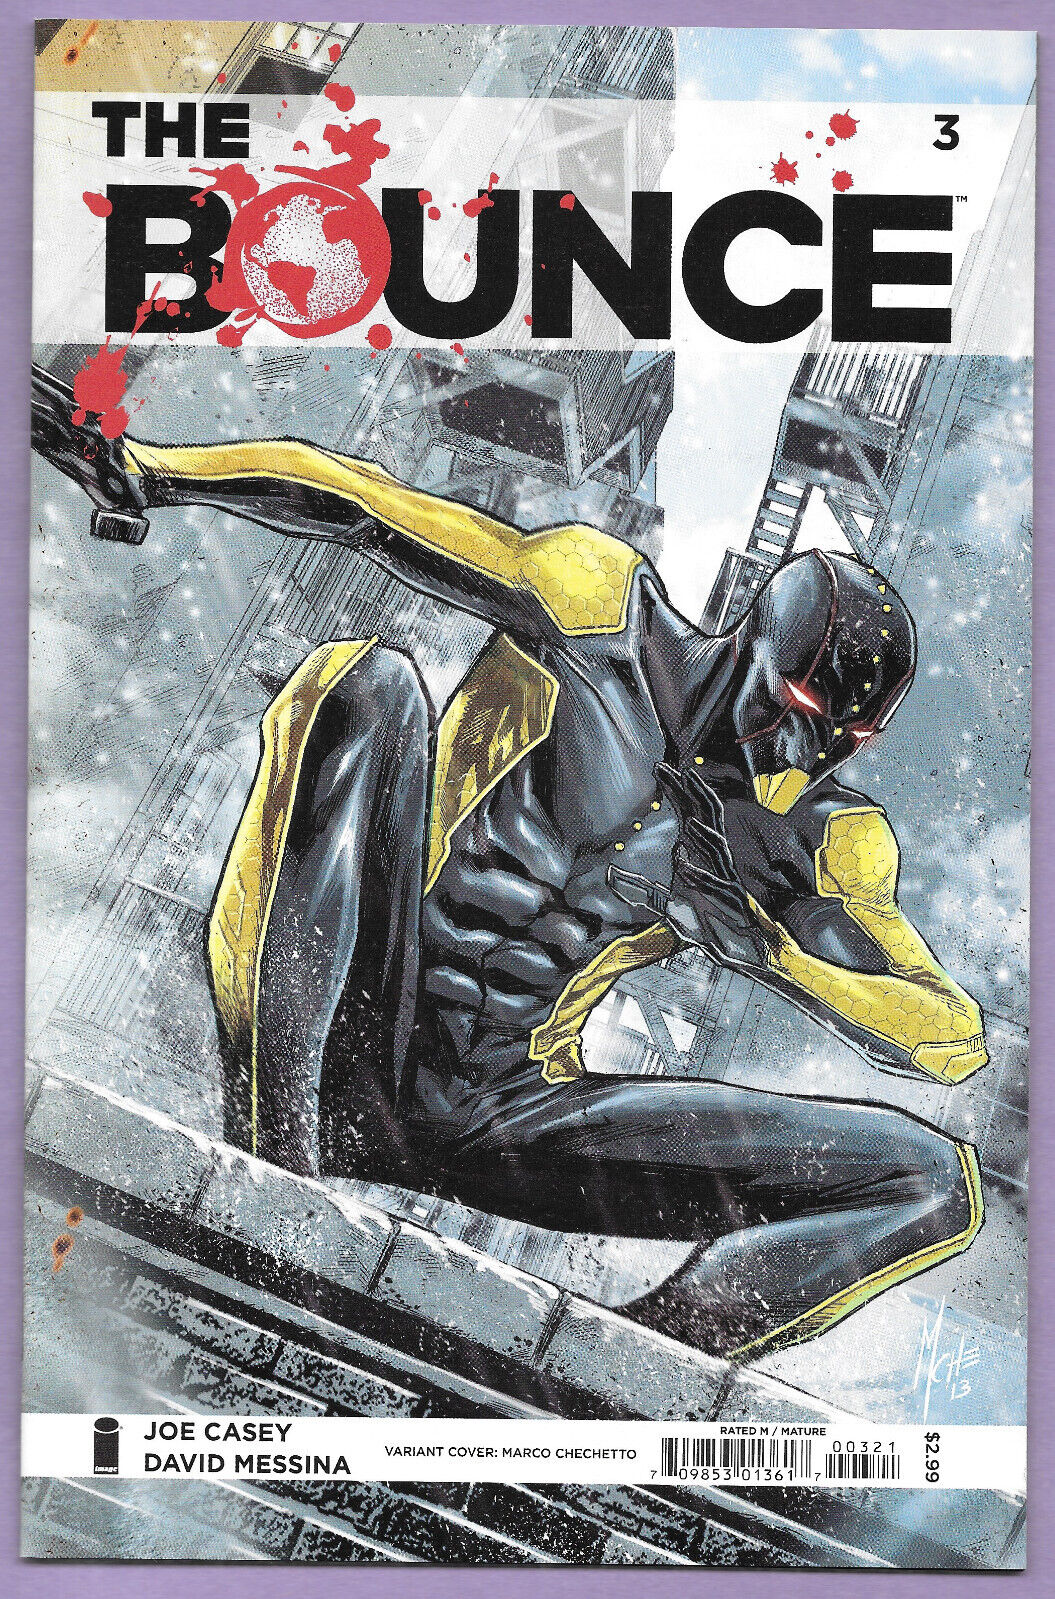 The Bounce #3 (067/2013) Image Comics Joe Casey / David Messina 2nd Printing